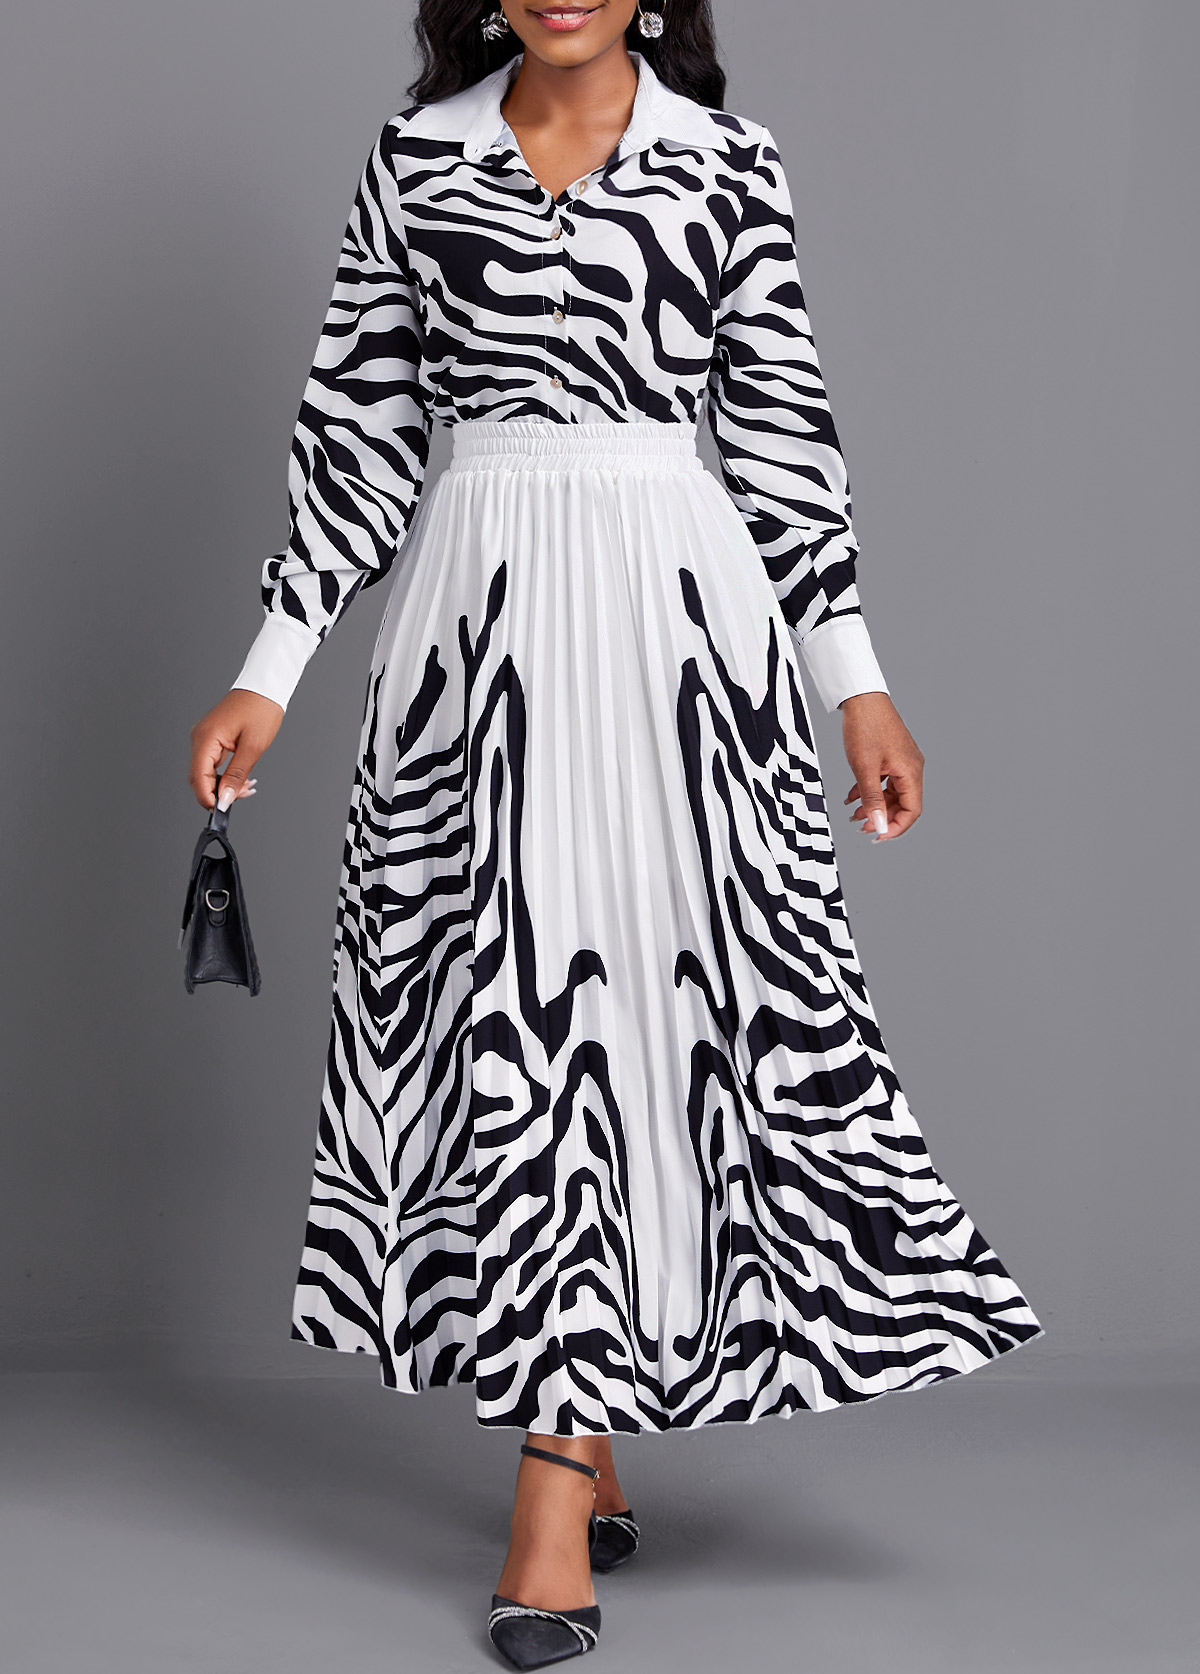 Zebra Stripe Print Pleated White Maxi Top and Skirt